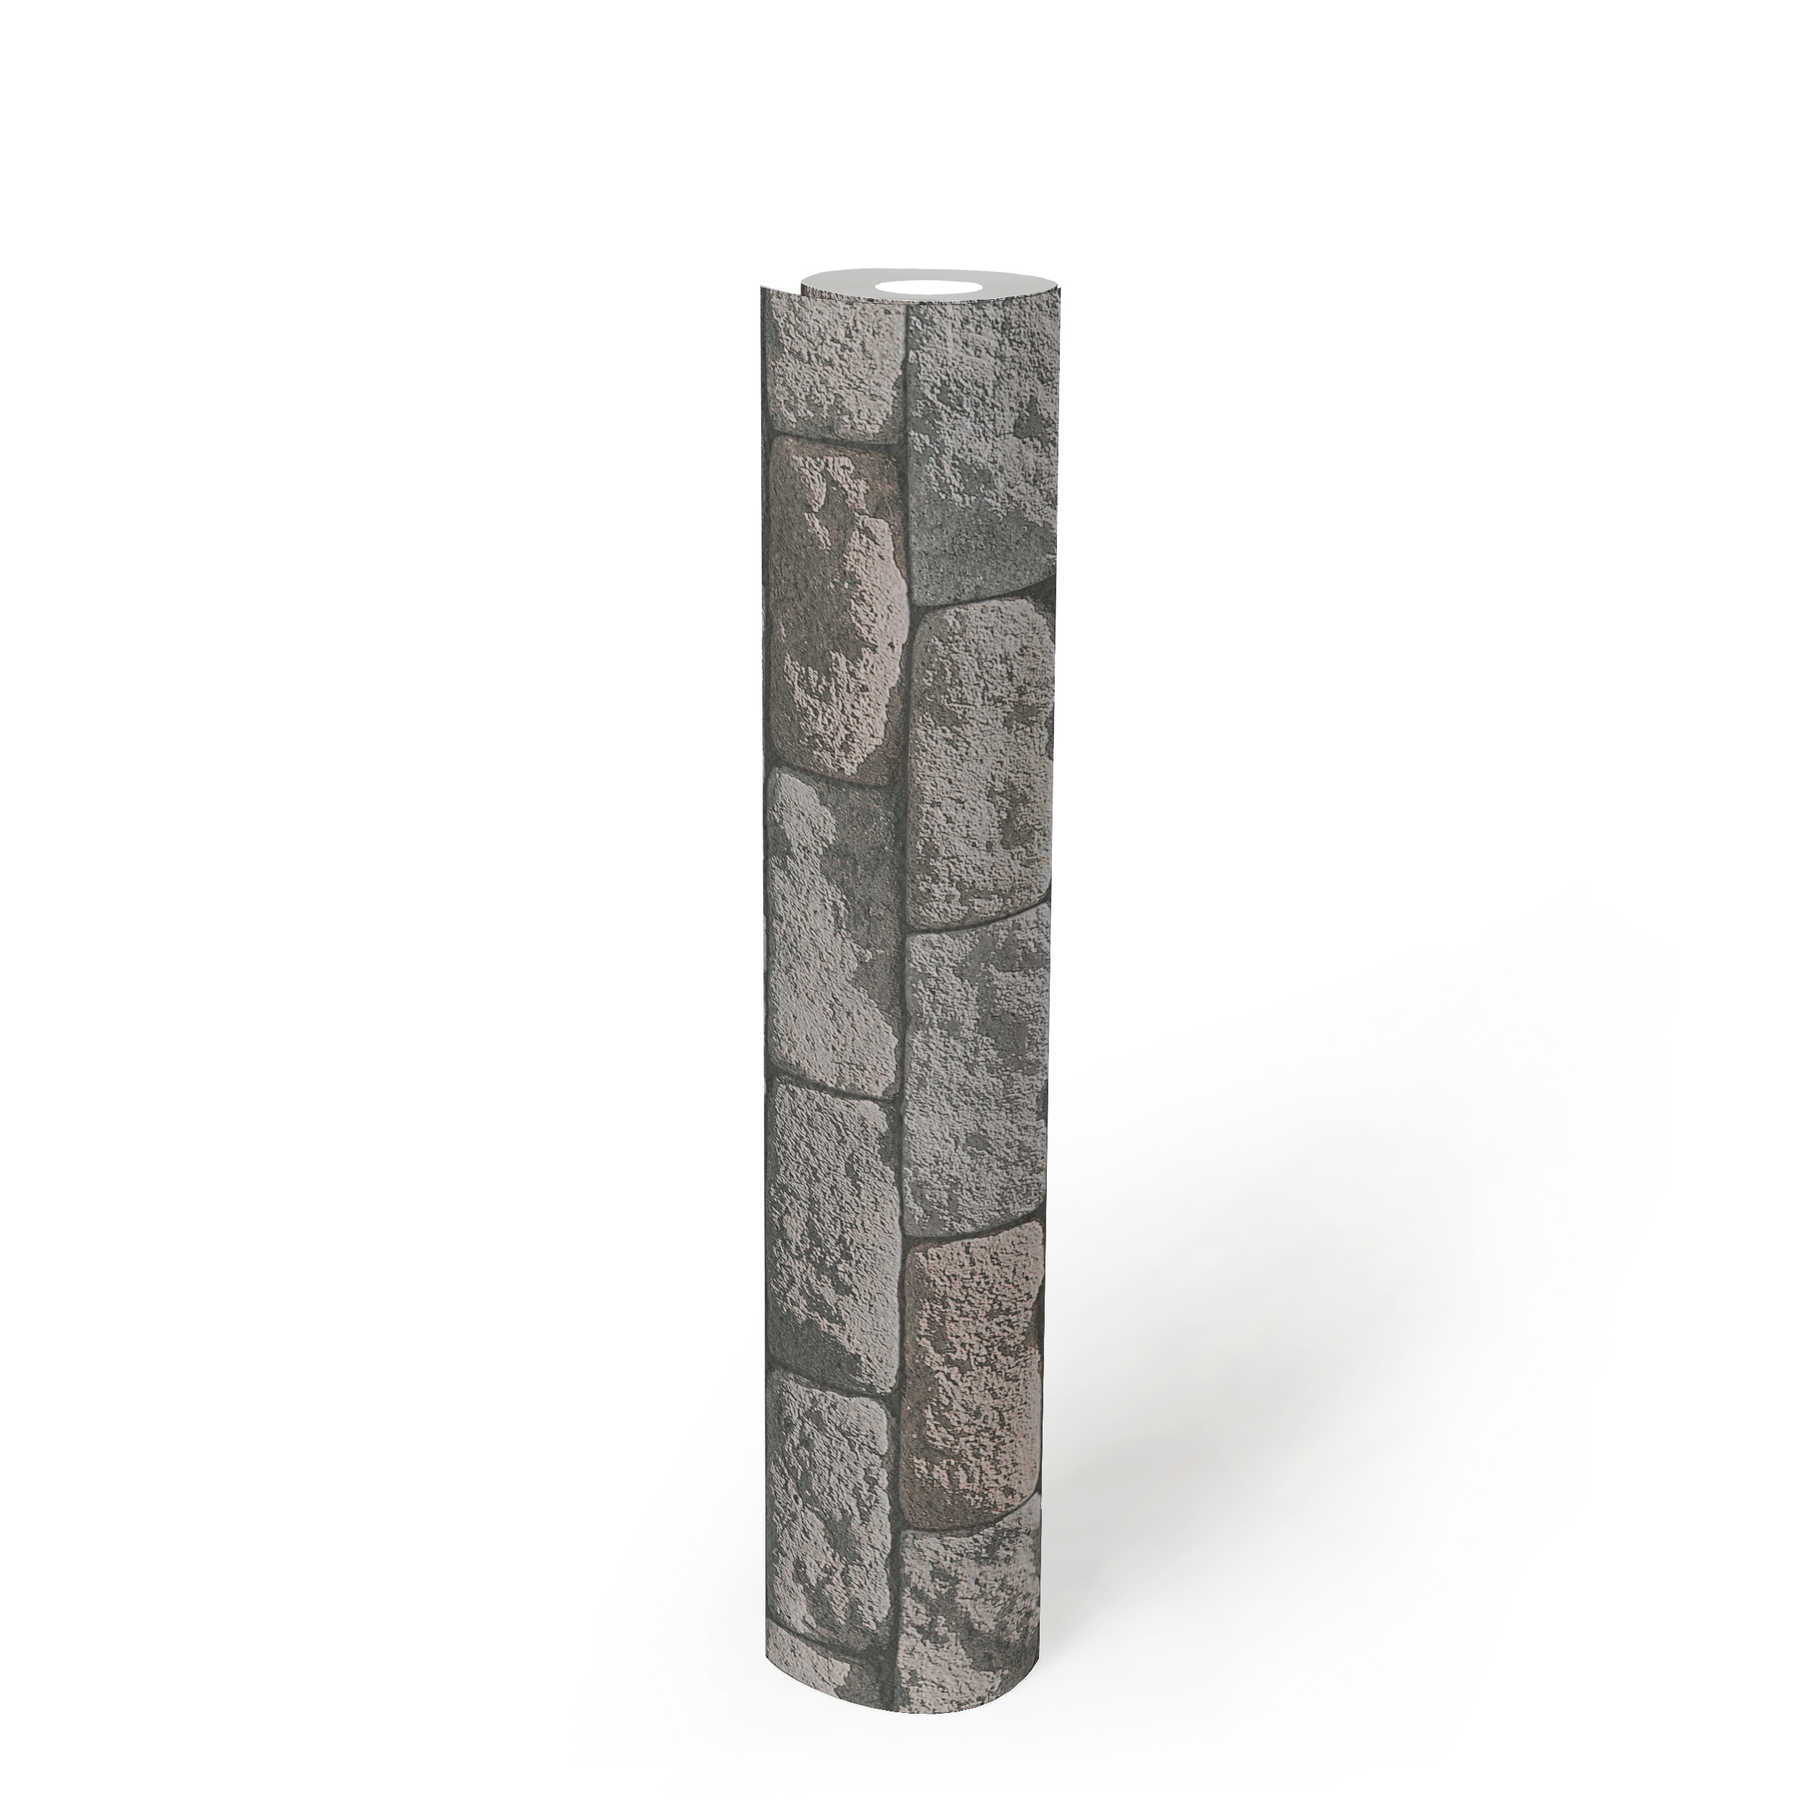             Masonry wallpaper in stone look & 3D look - beige, grey
        